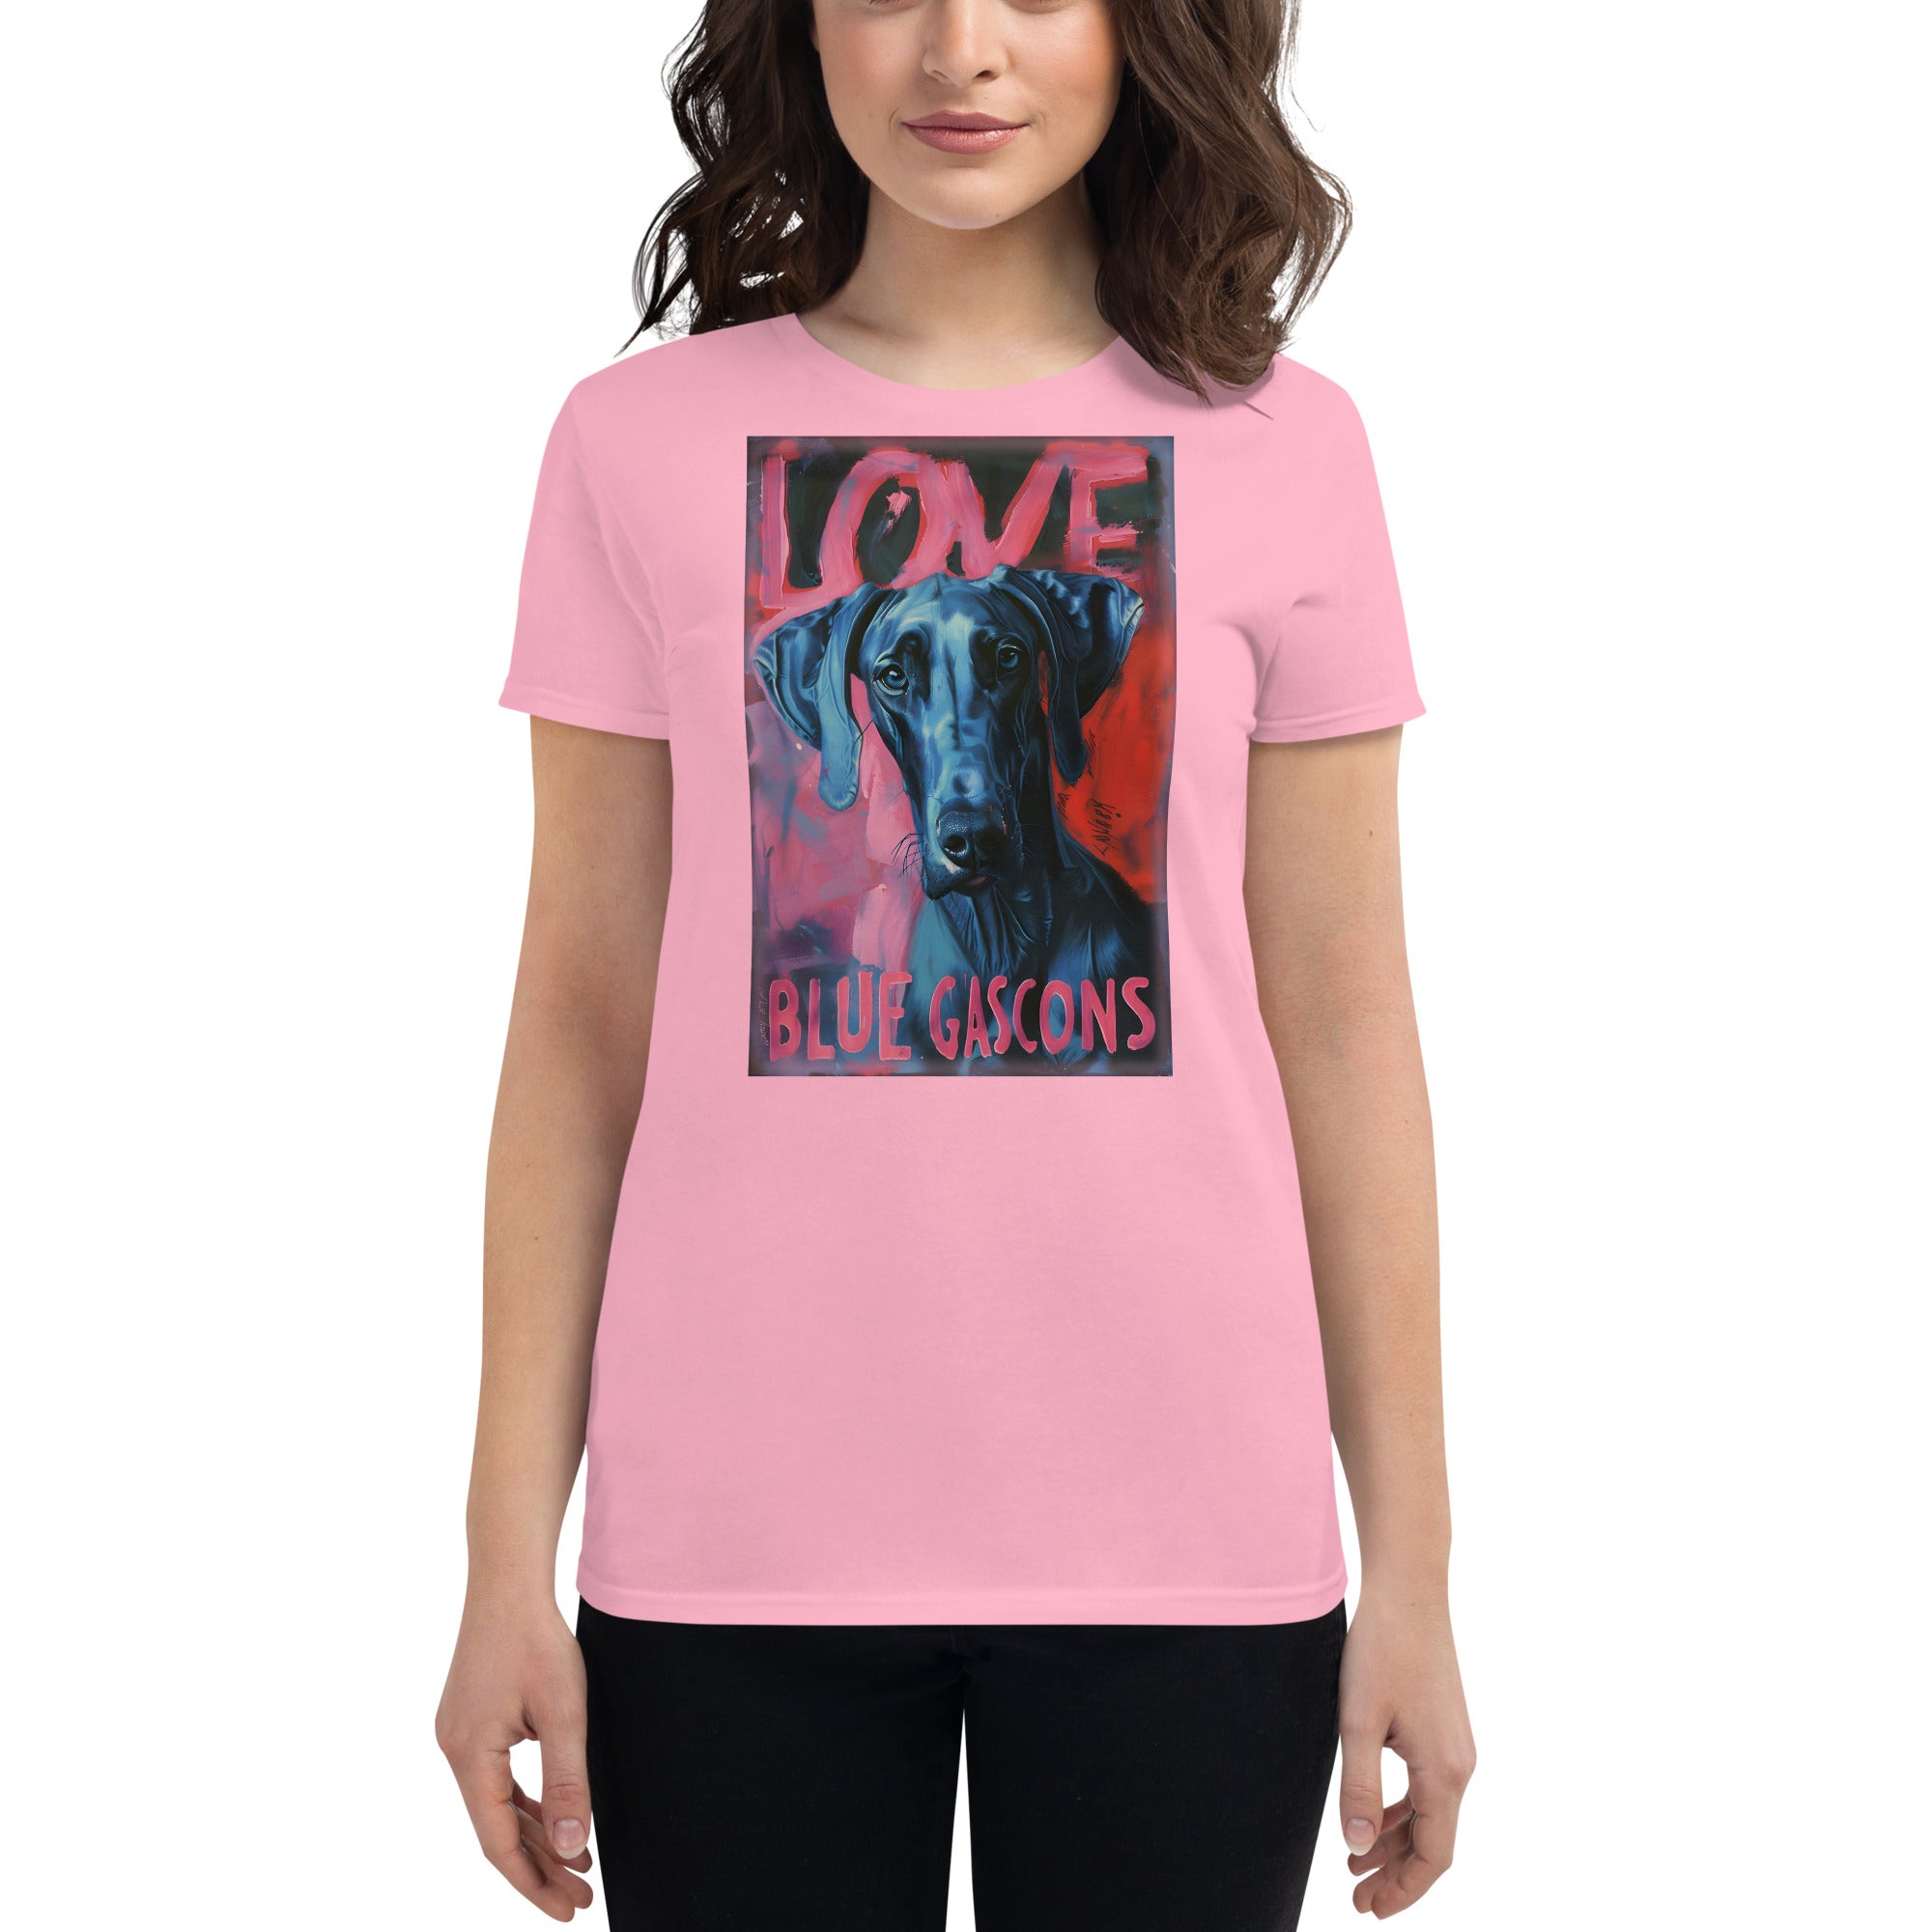 American Blue Gascon Hound Women's short sleeve t-shirt